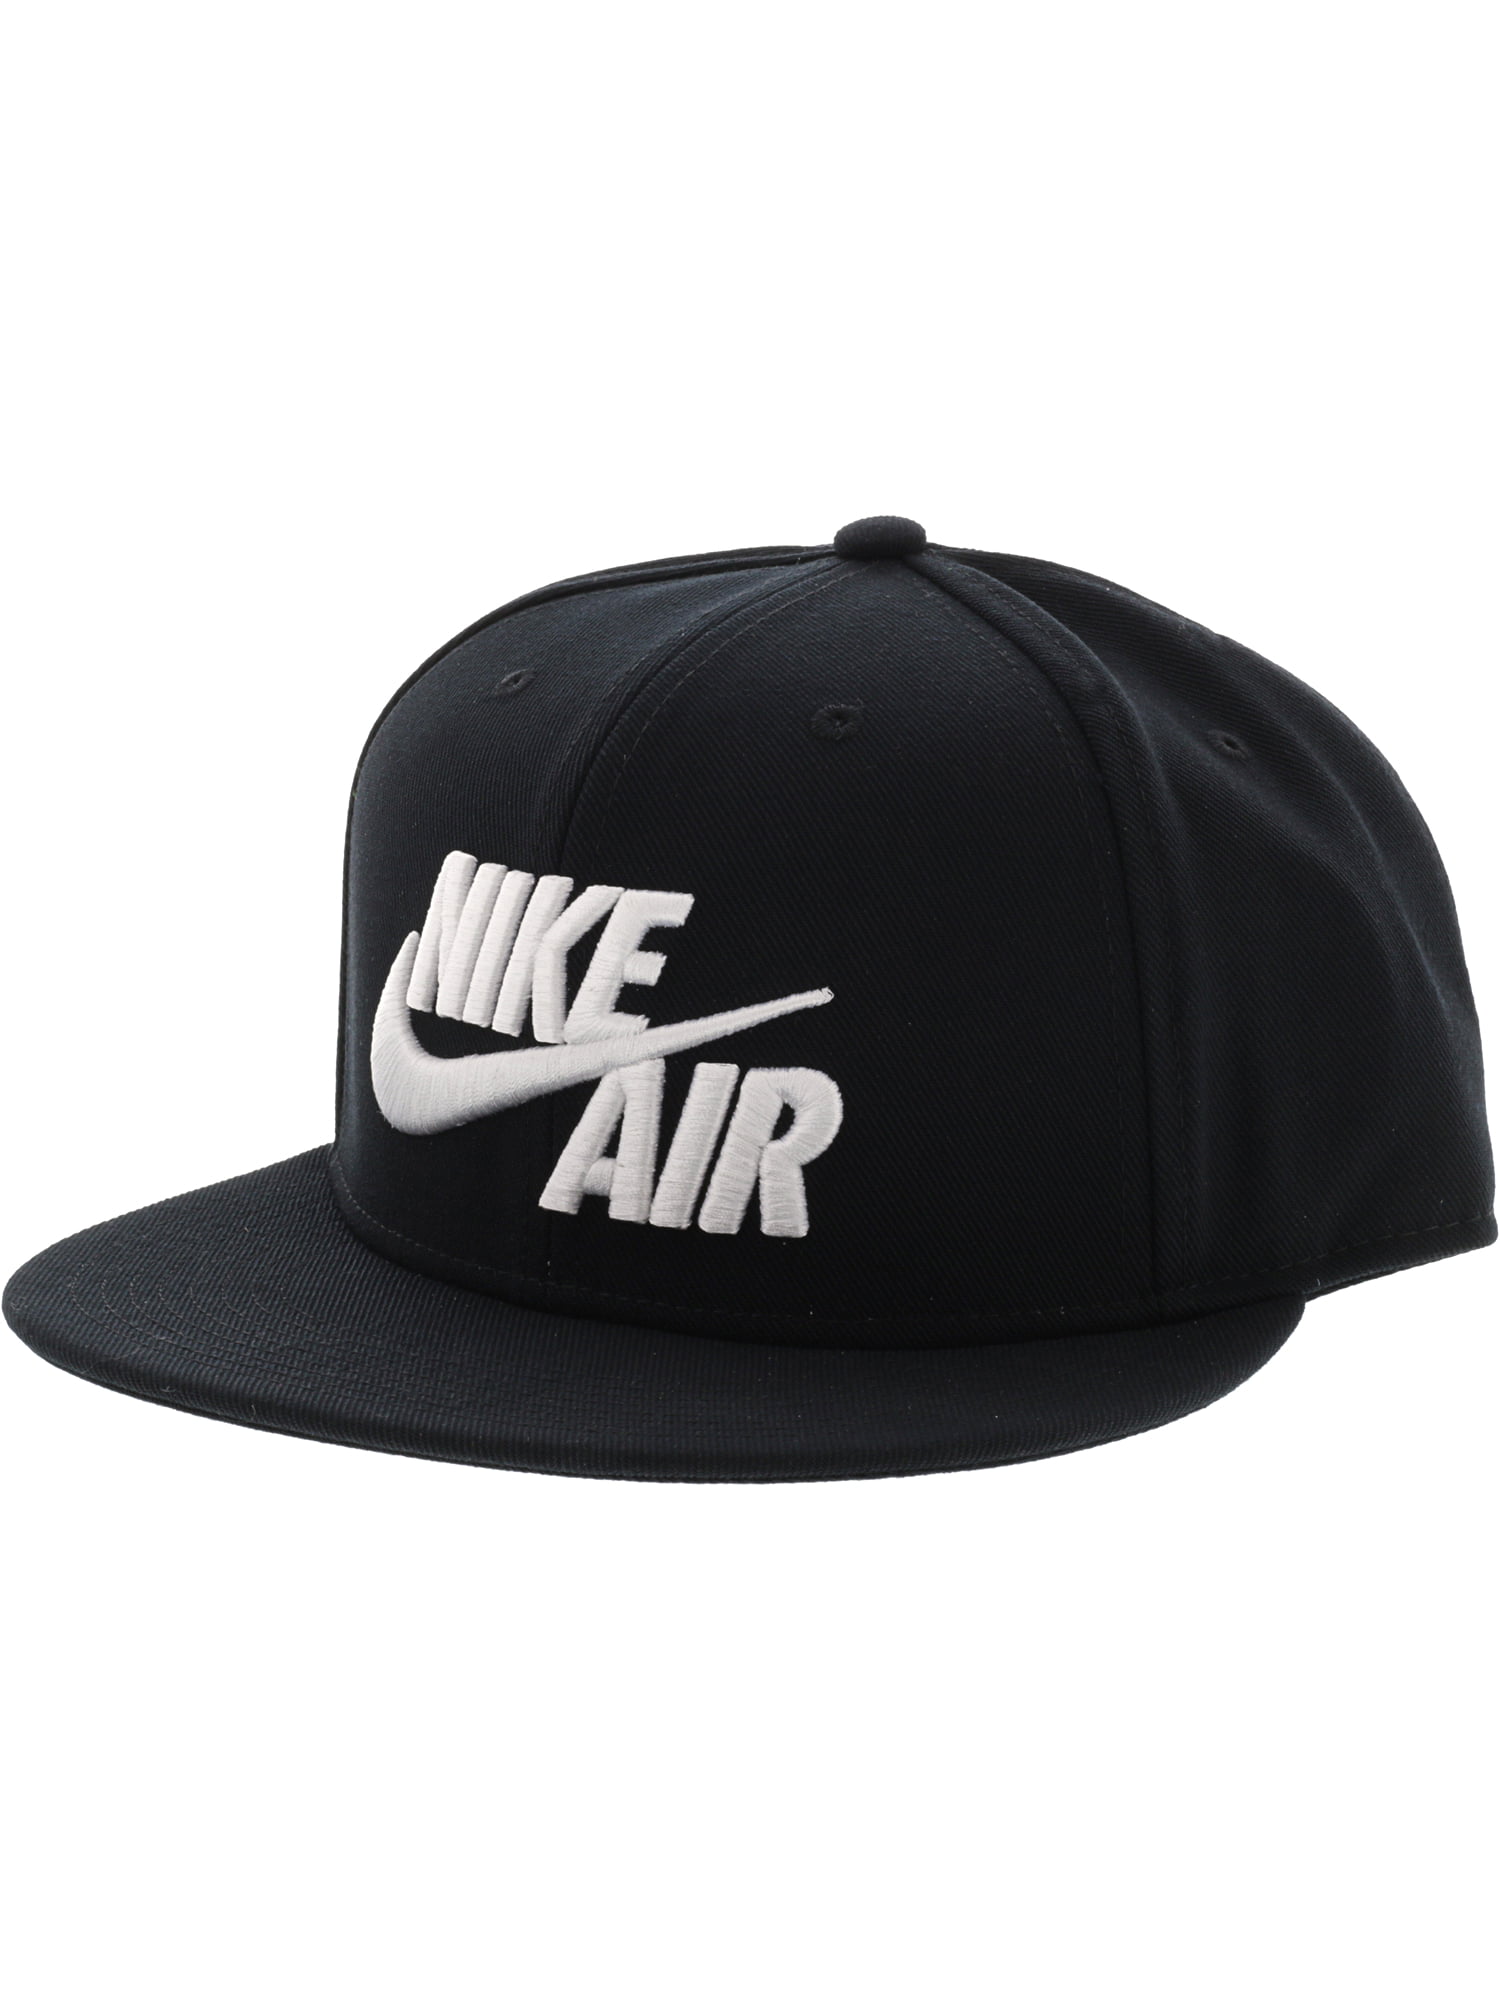 Nike Black / White Air True Snapback 